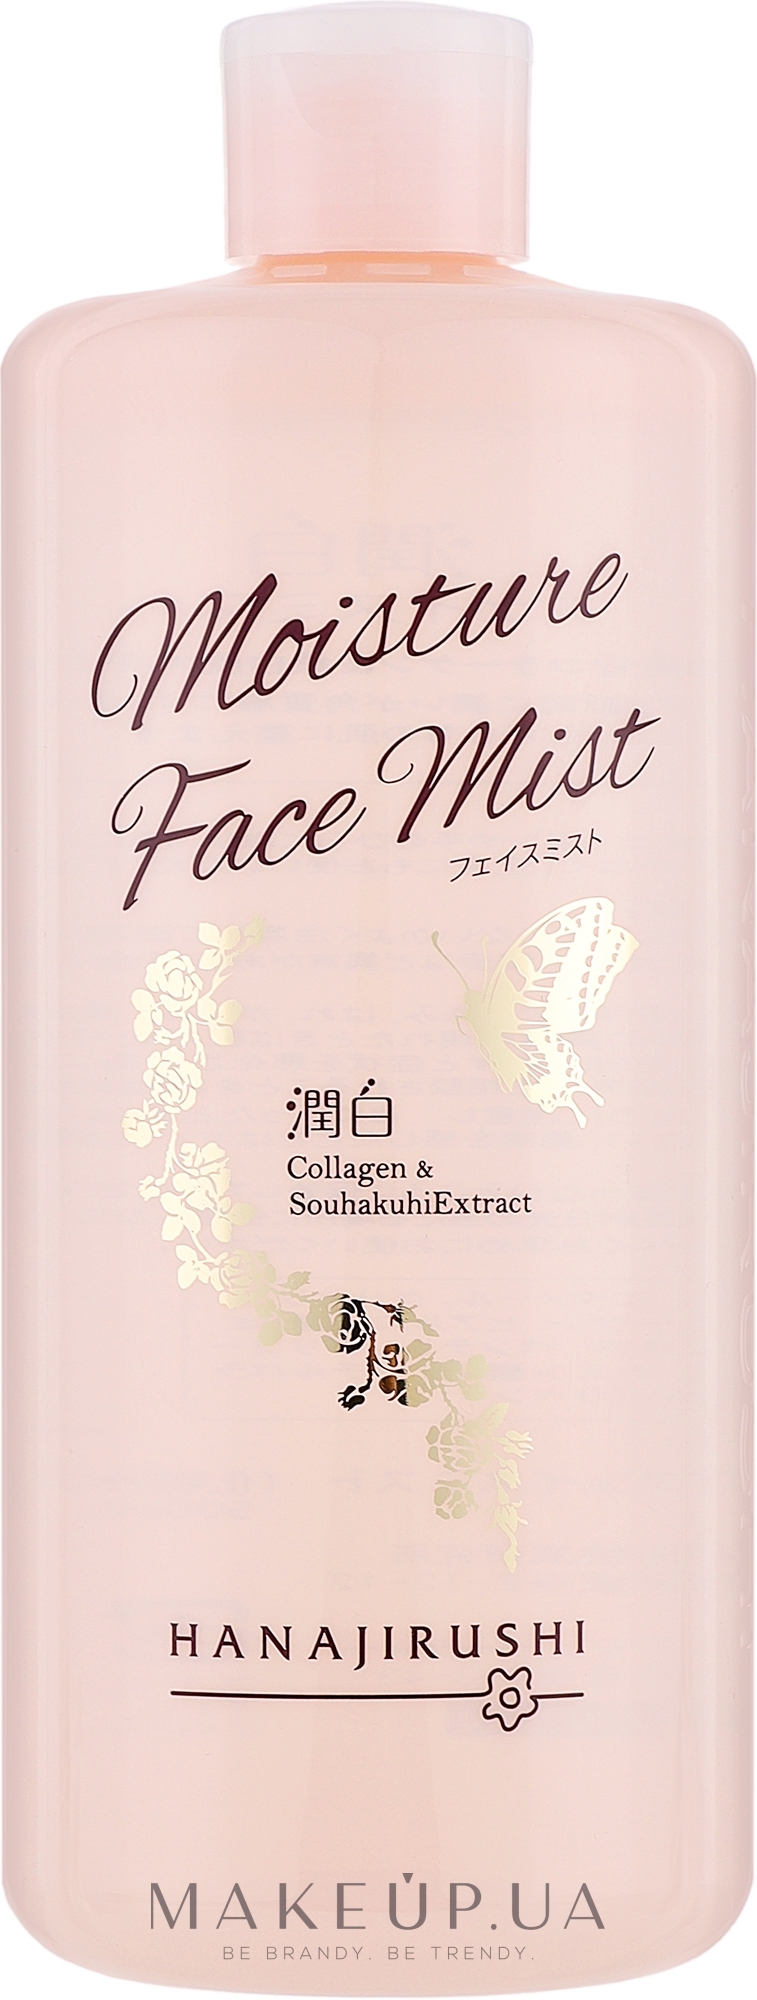 Увлажняющий мист-лосьон с осветляющим эффектом - Hanajirushi Moisture Face Mist  — фото 500ml